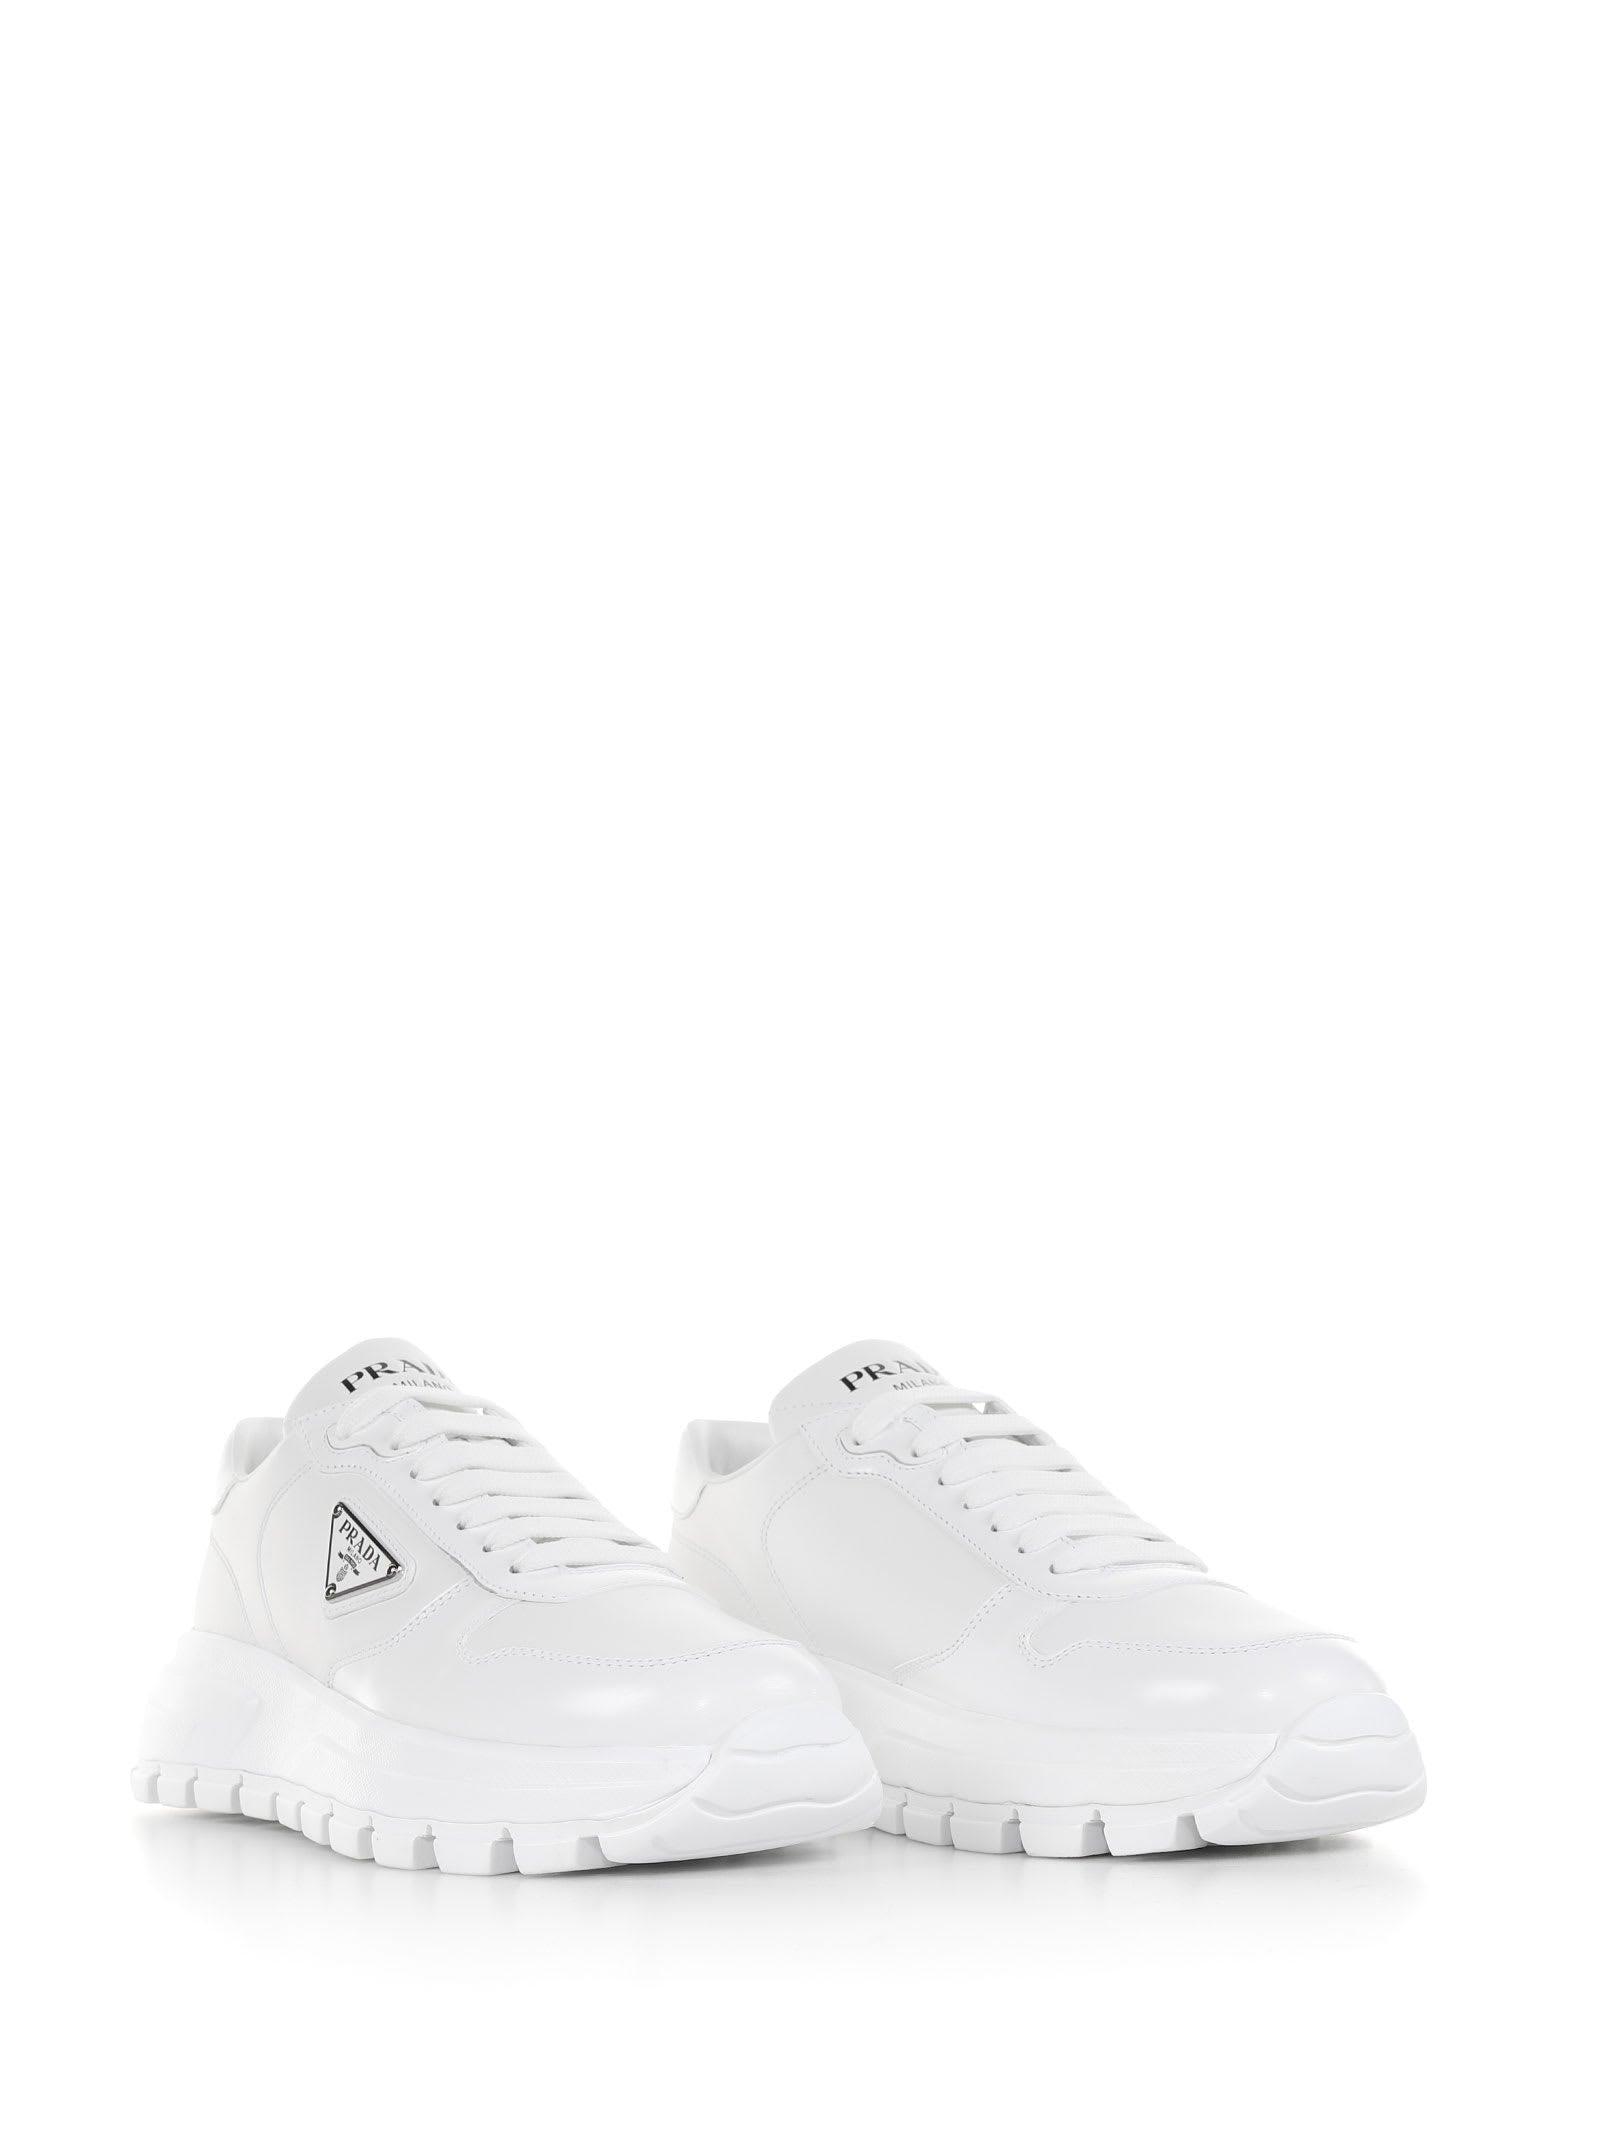 Prada Leather Prax 1 Sneaker In Calfskin in White | Lyst